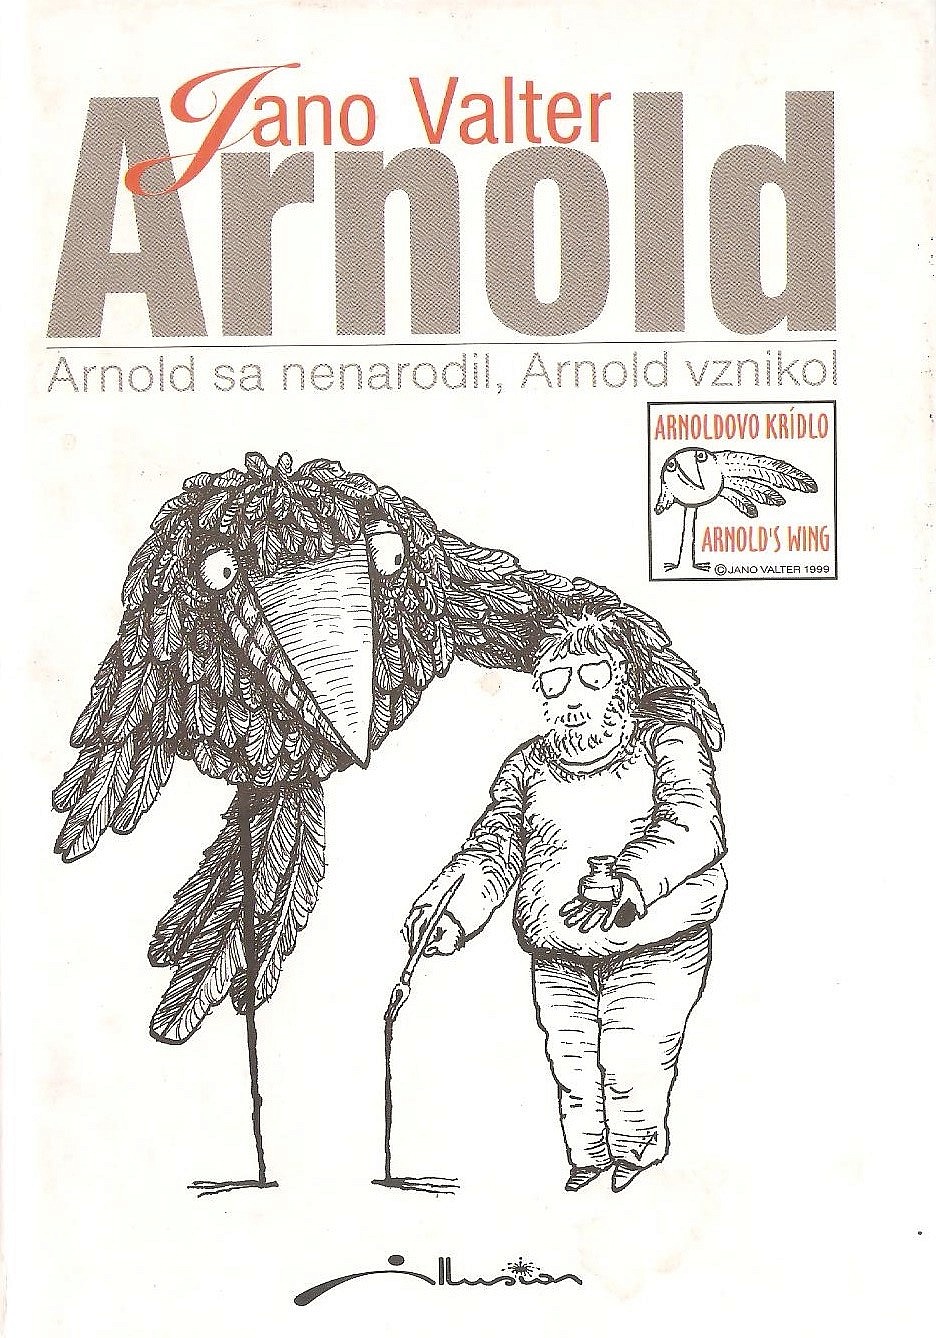 Arnold sa nenarodil, Arnold vznikol